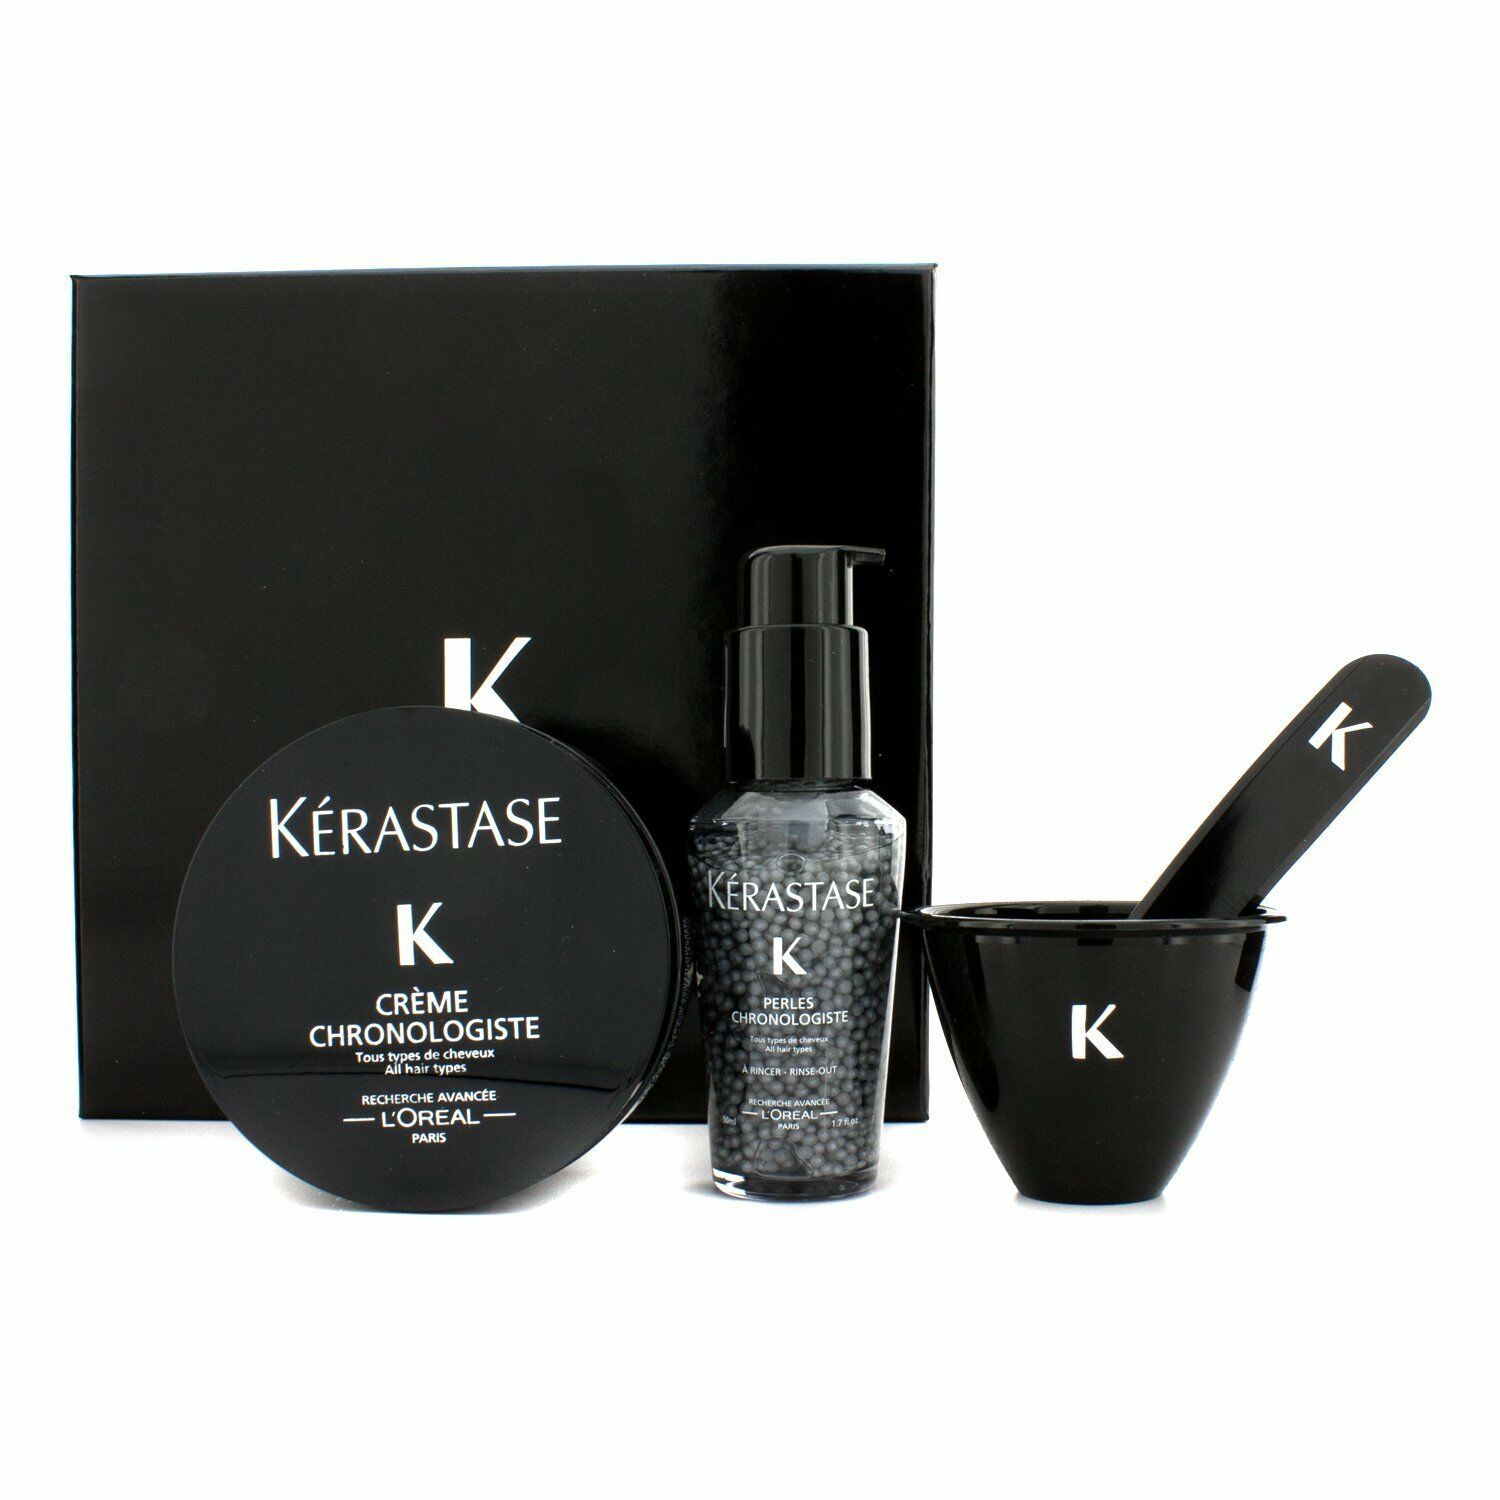 Kerastase Chronologiste Kit Cream 200ml And Pearls 50ml, New In Box!